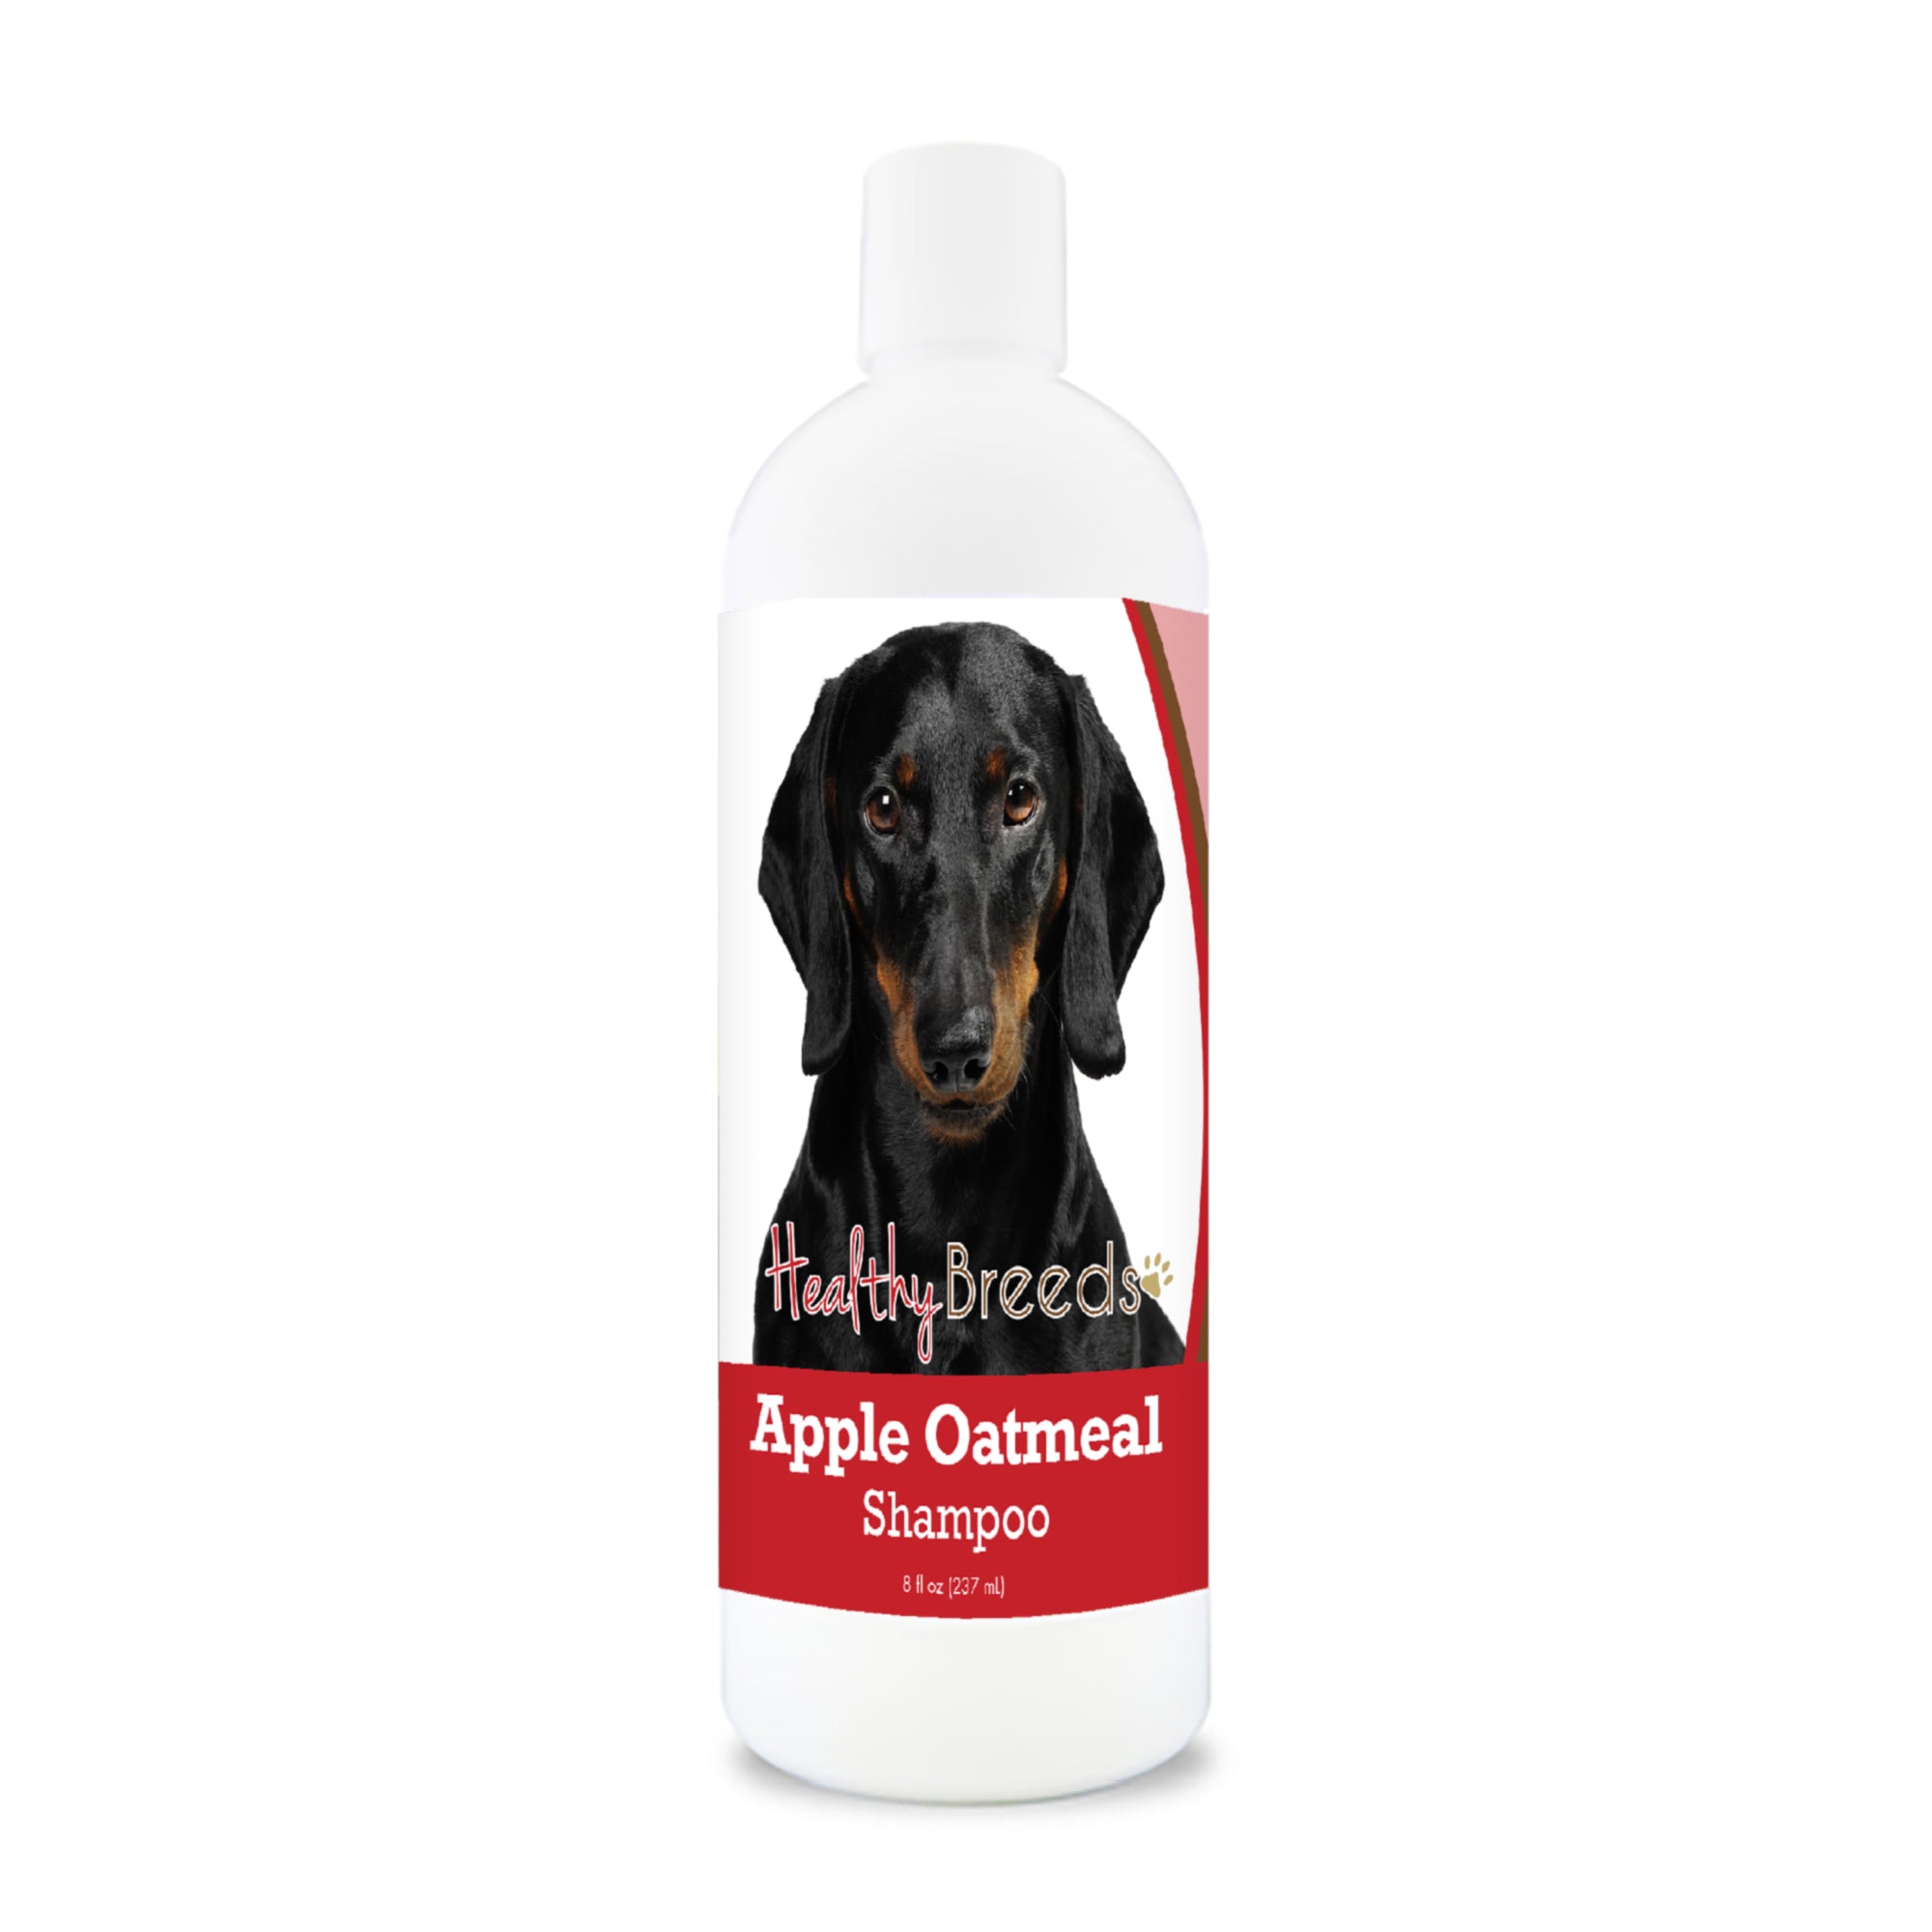 Dachshund Apple Oatmeal Shampoo 8 oz